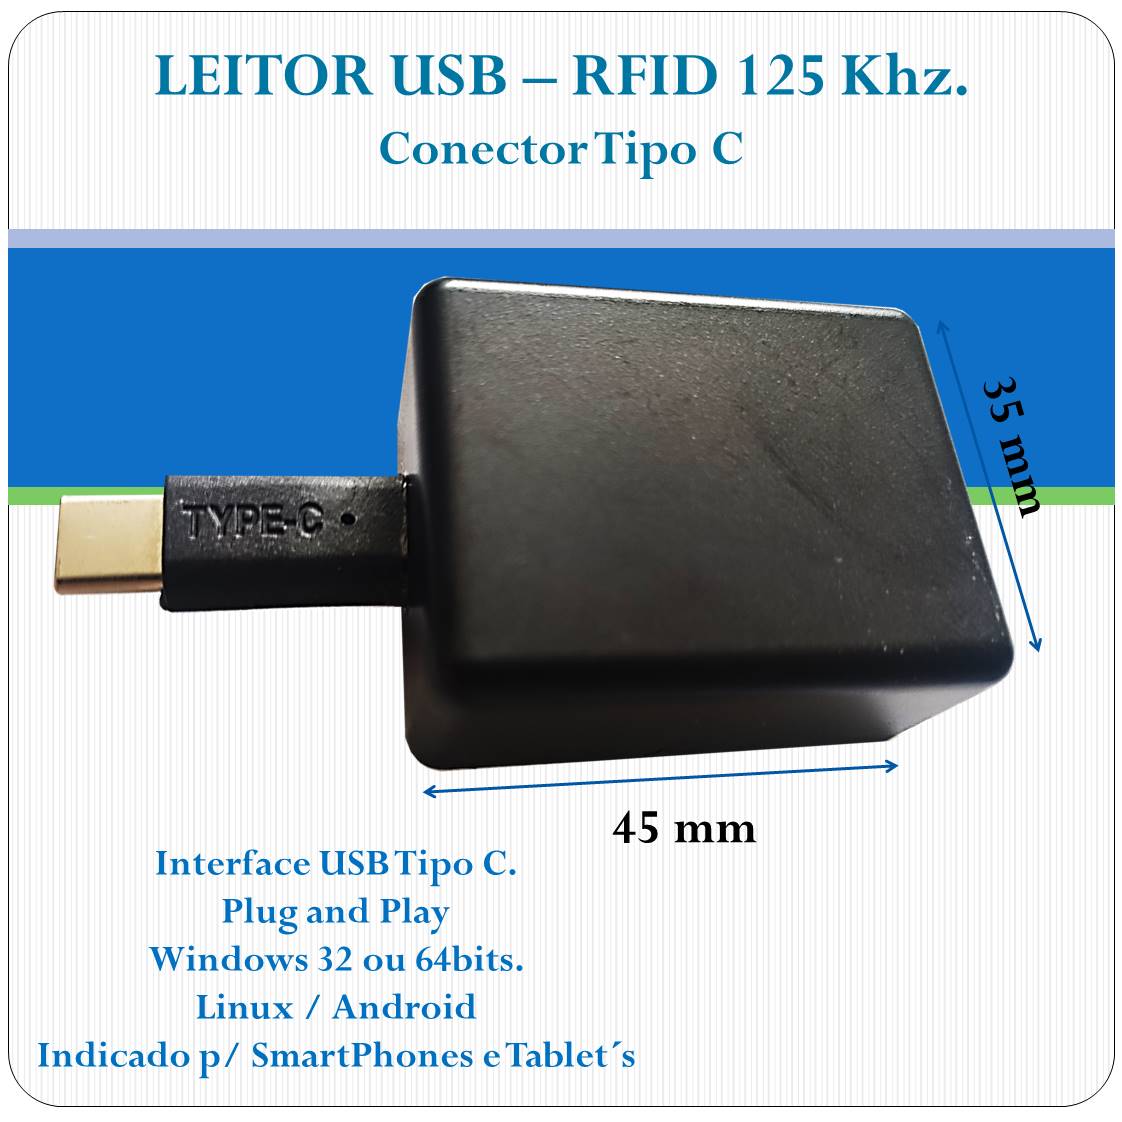 Mini Leitor RFID proximidade USB Tipo C - 125Khz